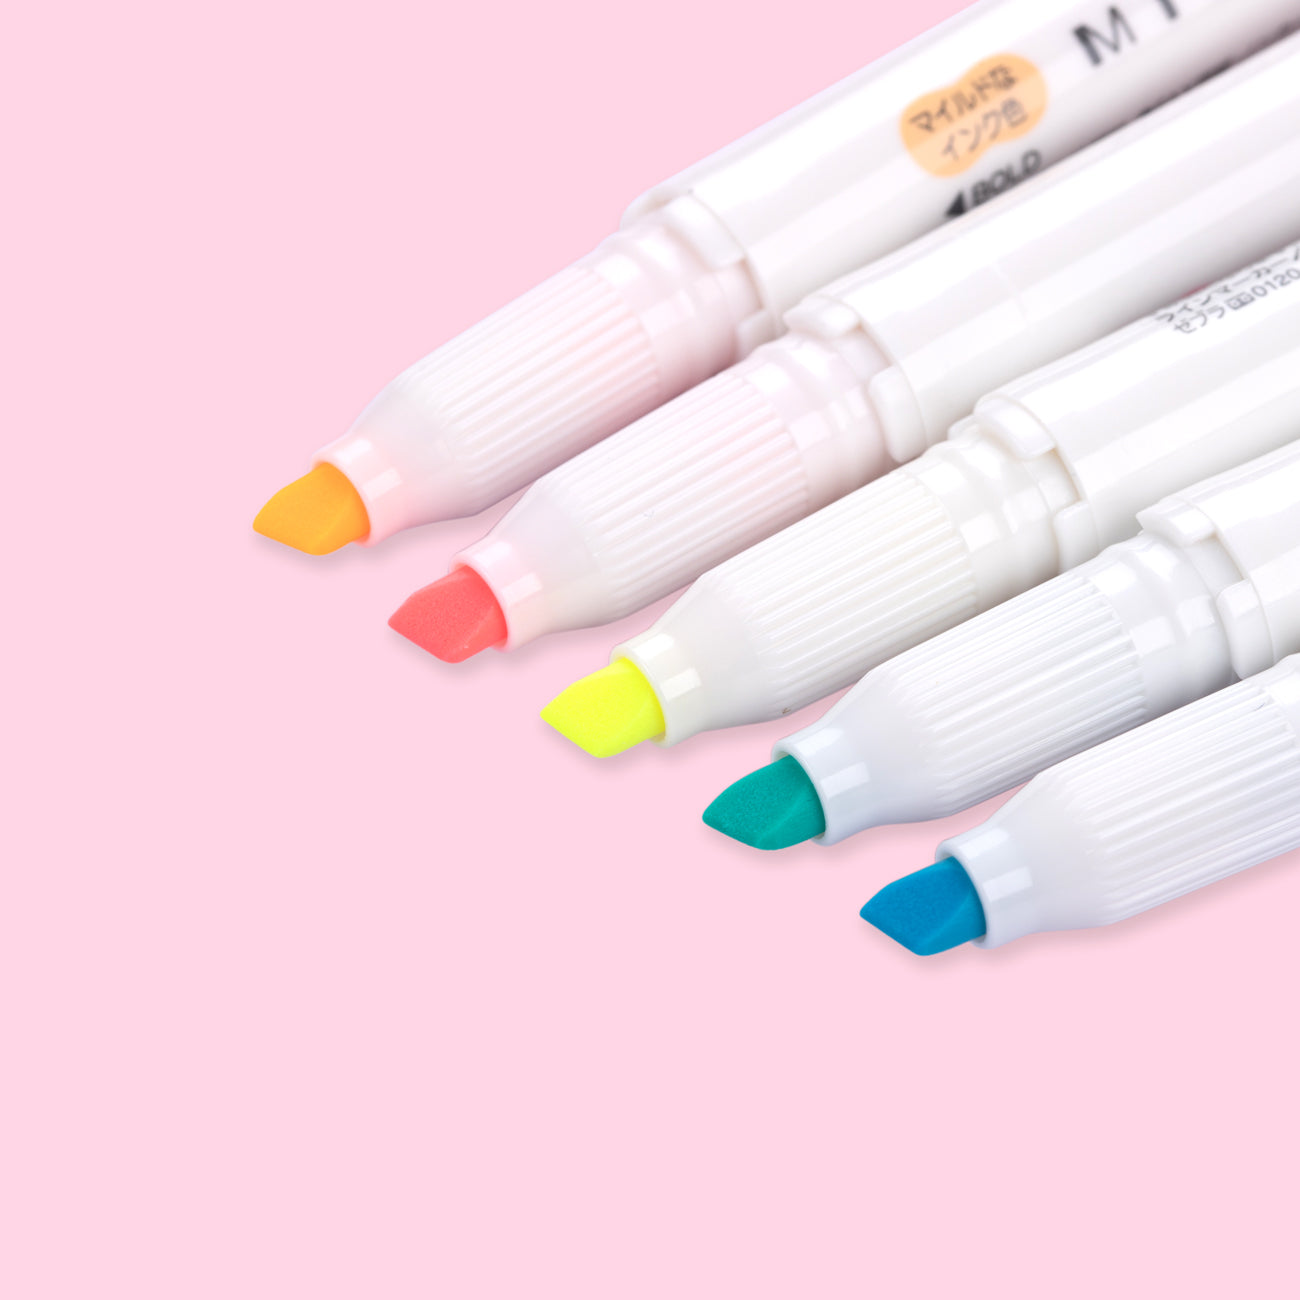 Zebra Pen MILDLINER Dual Tip Fluorescent Highlighter Pens, Pastel  Highlighter Pens For Adults, Broad & Fine Tip Markers & Highlighters For  Many Uses